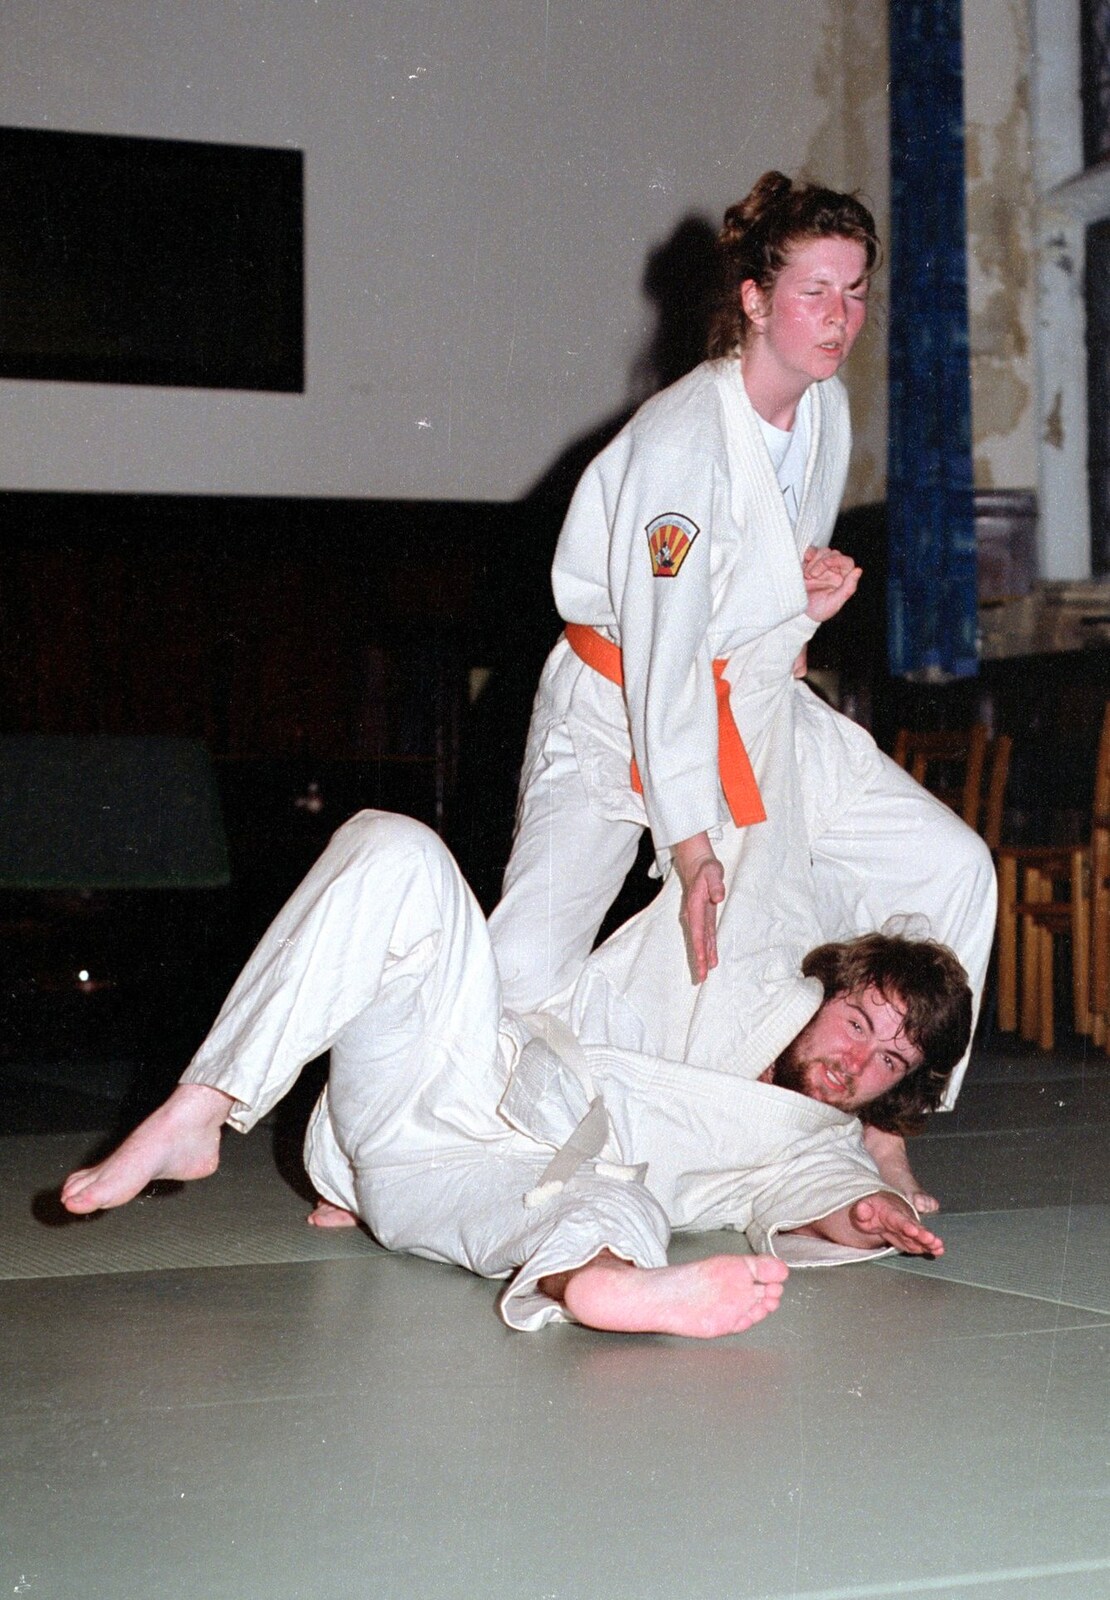 A Jiu Jitsu move from Uni: Riki's Barbeque and Dobbs' Jitsu, Plymouth, Devon - 2nd June 1989